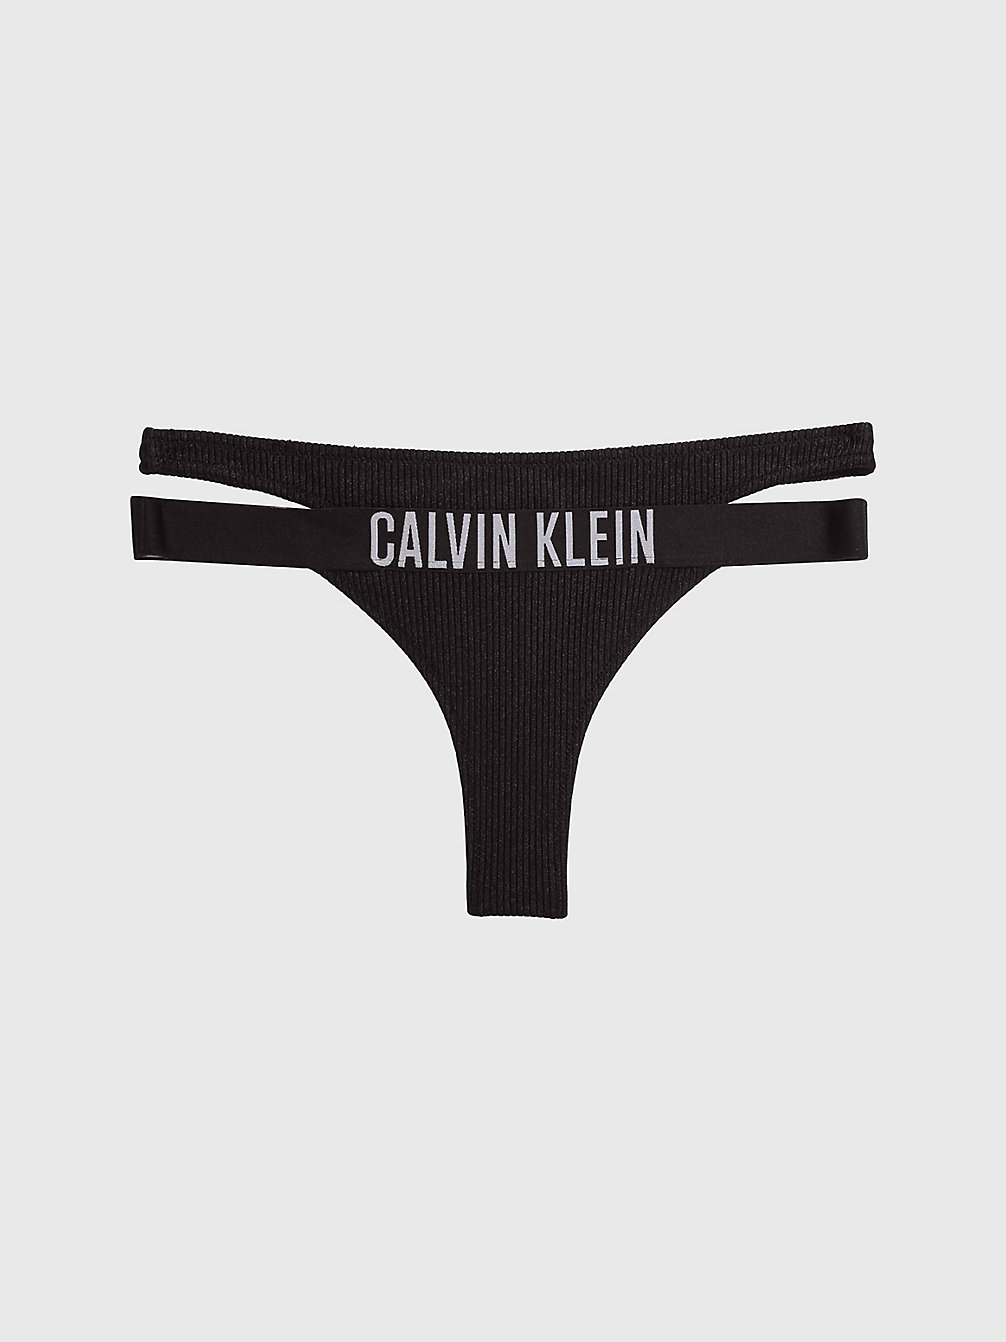 PVH BLACK > Thong Bikini Bottoms - Intense Power > undefined Женщины - Calvin Klein